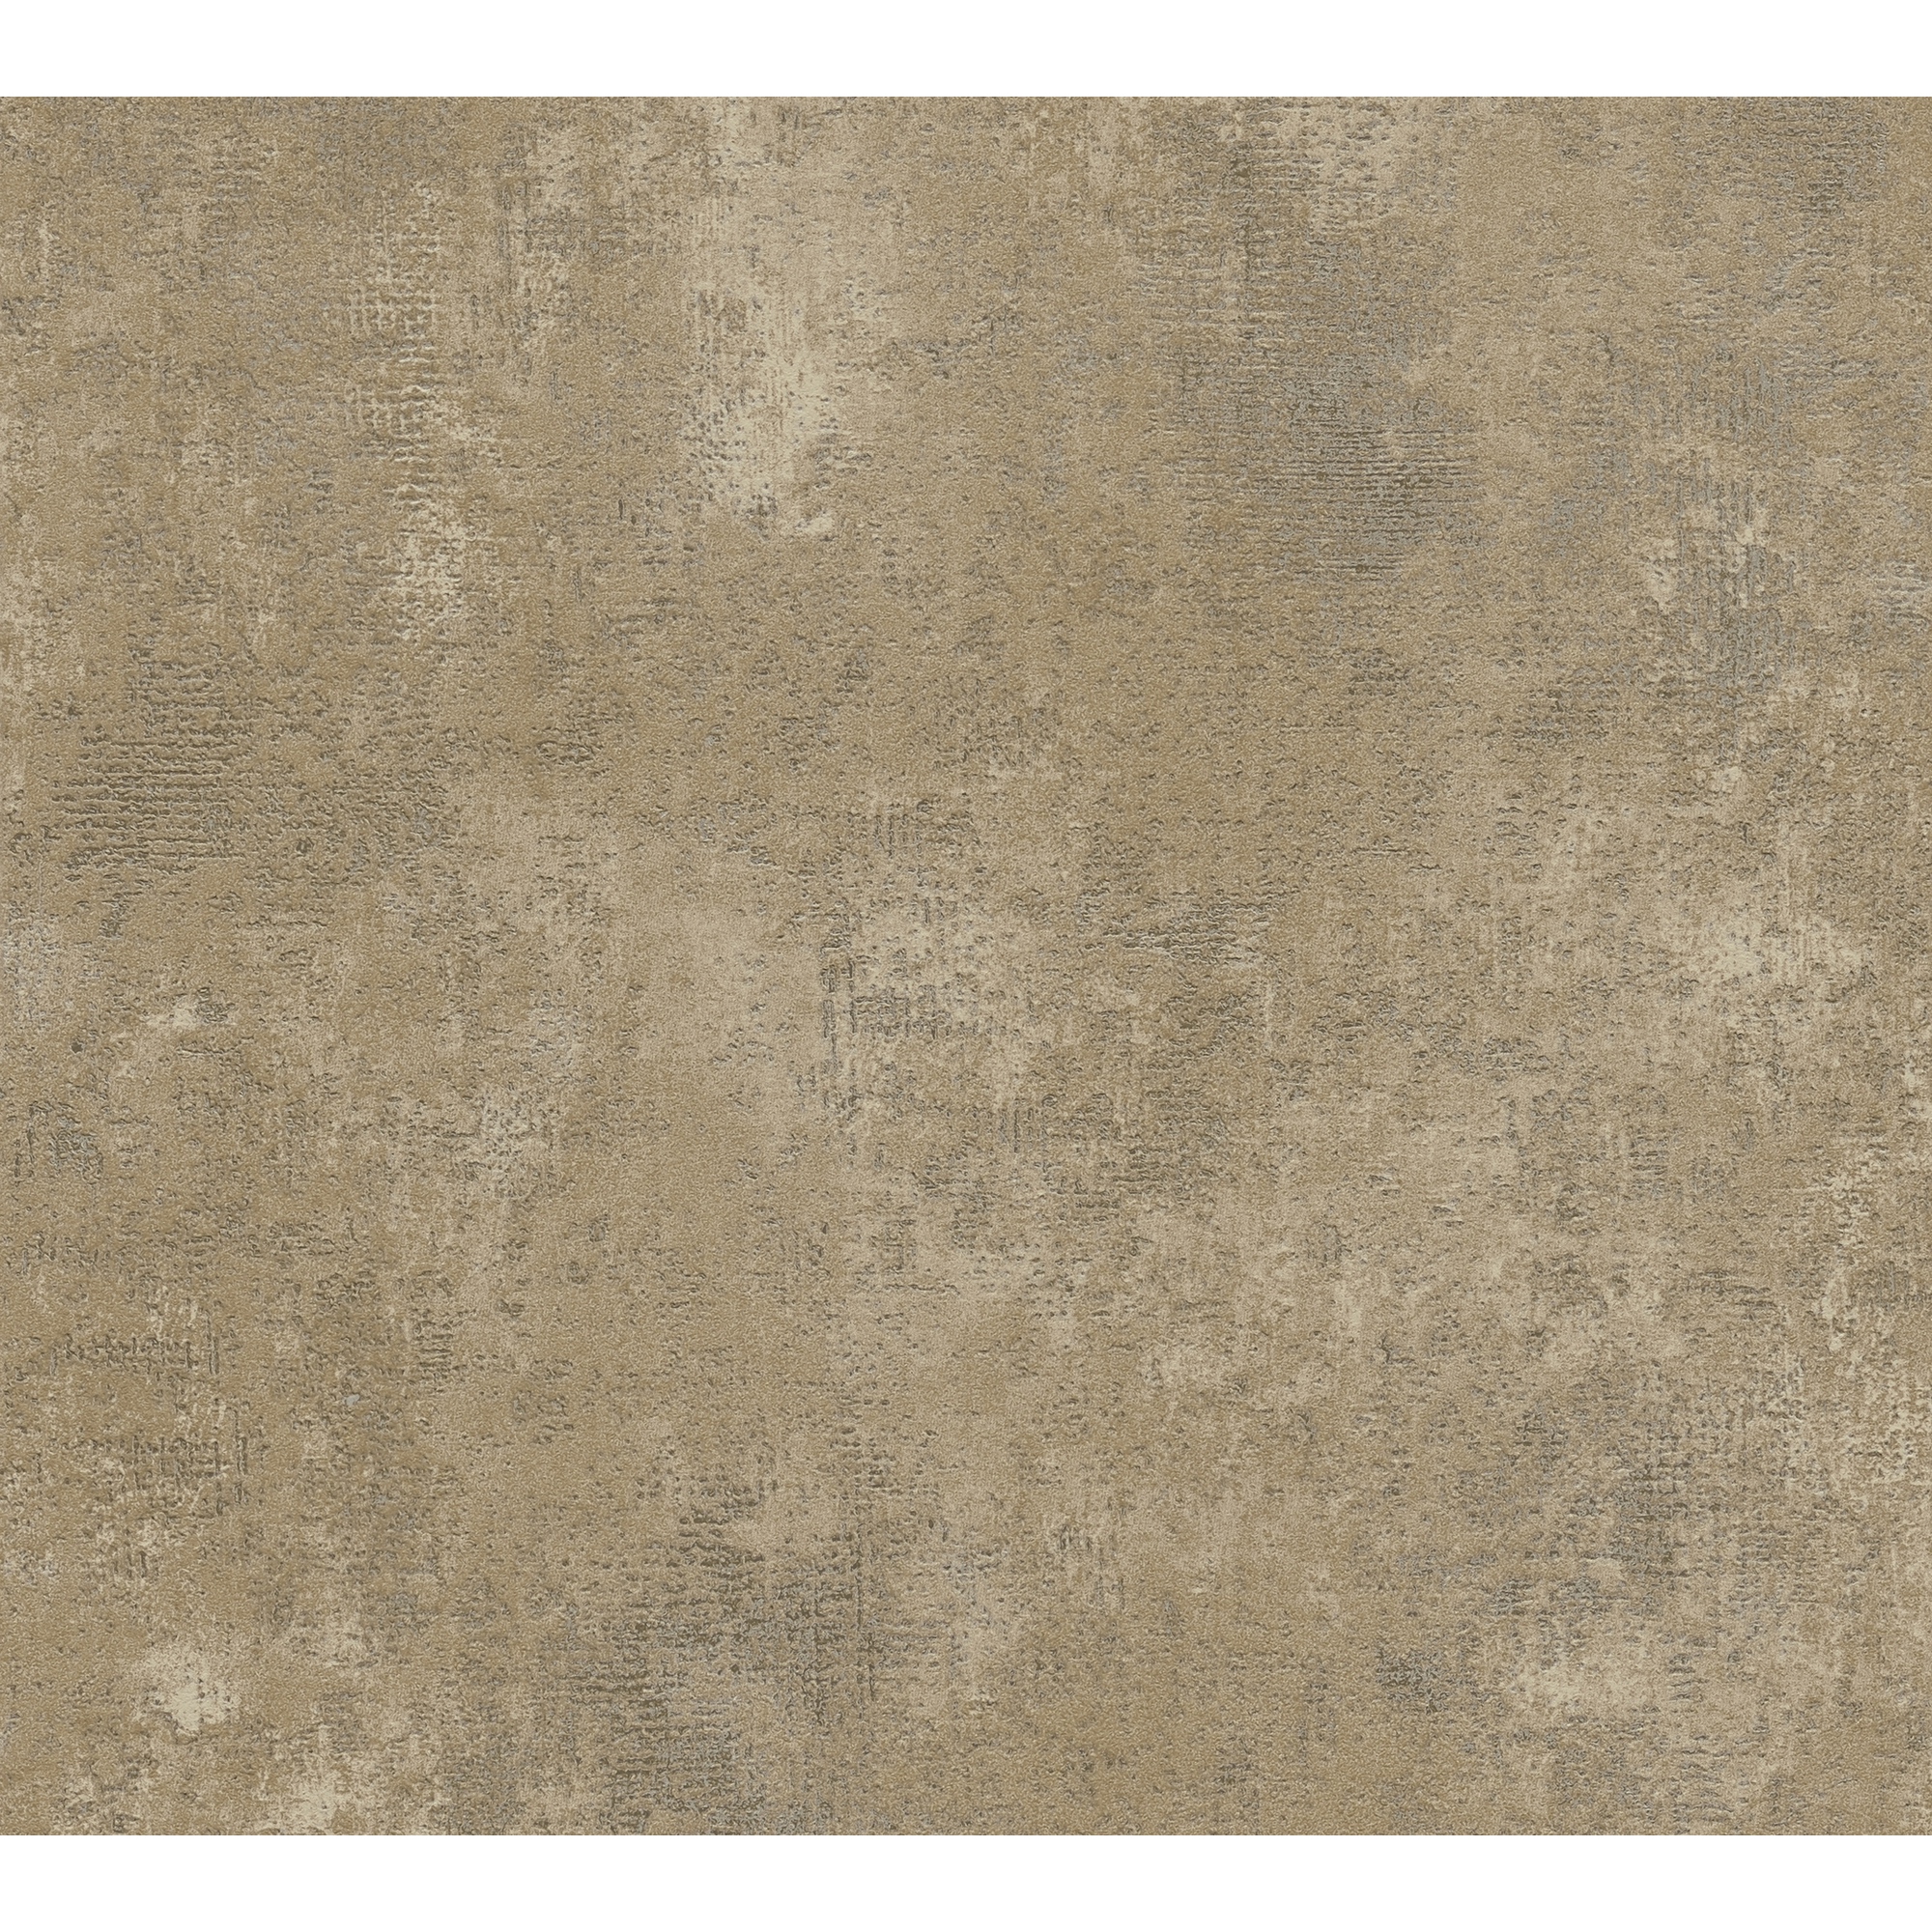 Vliestapete 'The BoS' Putzstruktur beige/gold 10,05 x 0,53 m + product picture